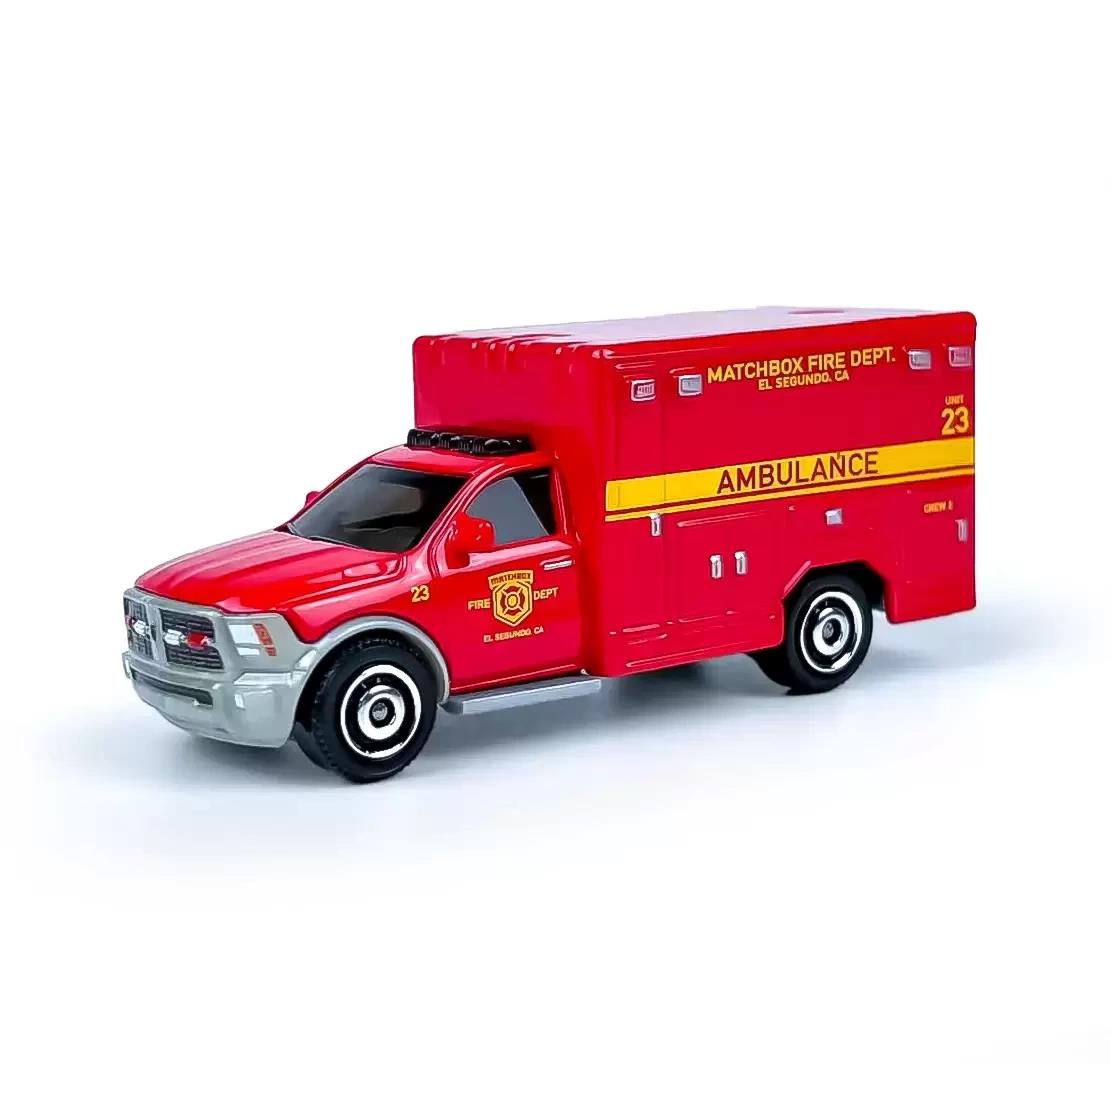 Matchbox Moving Parts Arabalar -2019 Ram Ambulance FWD28-HLG11 | Toysall